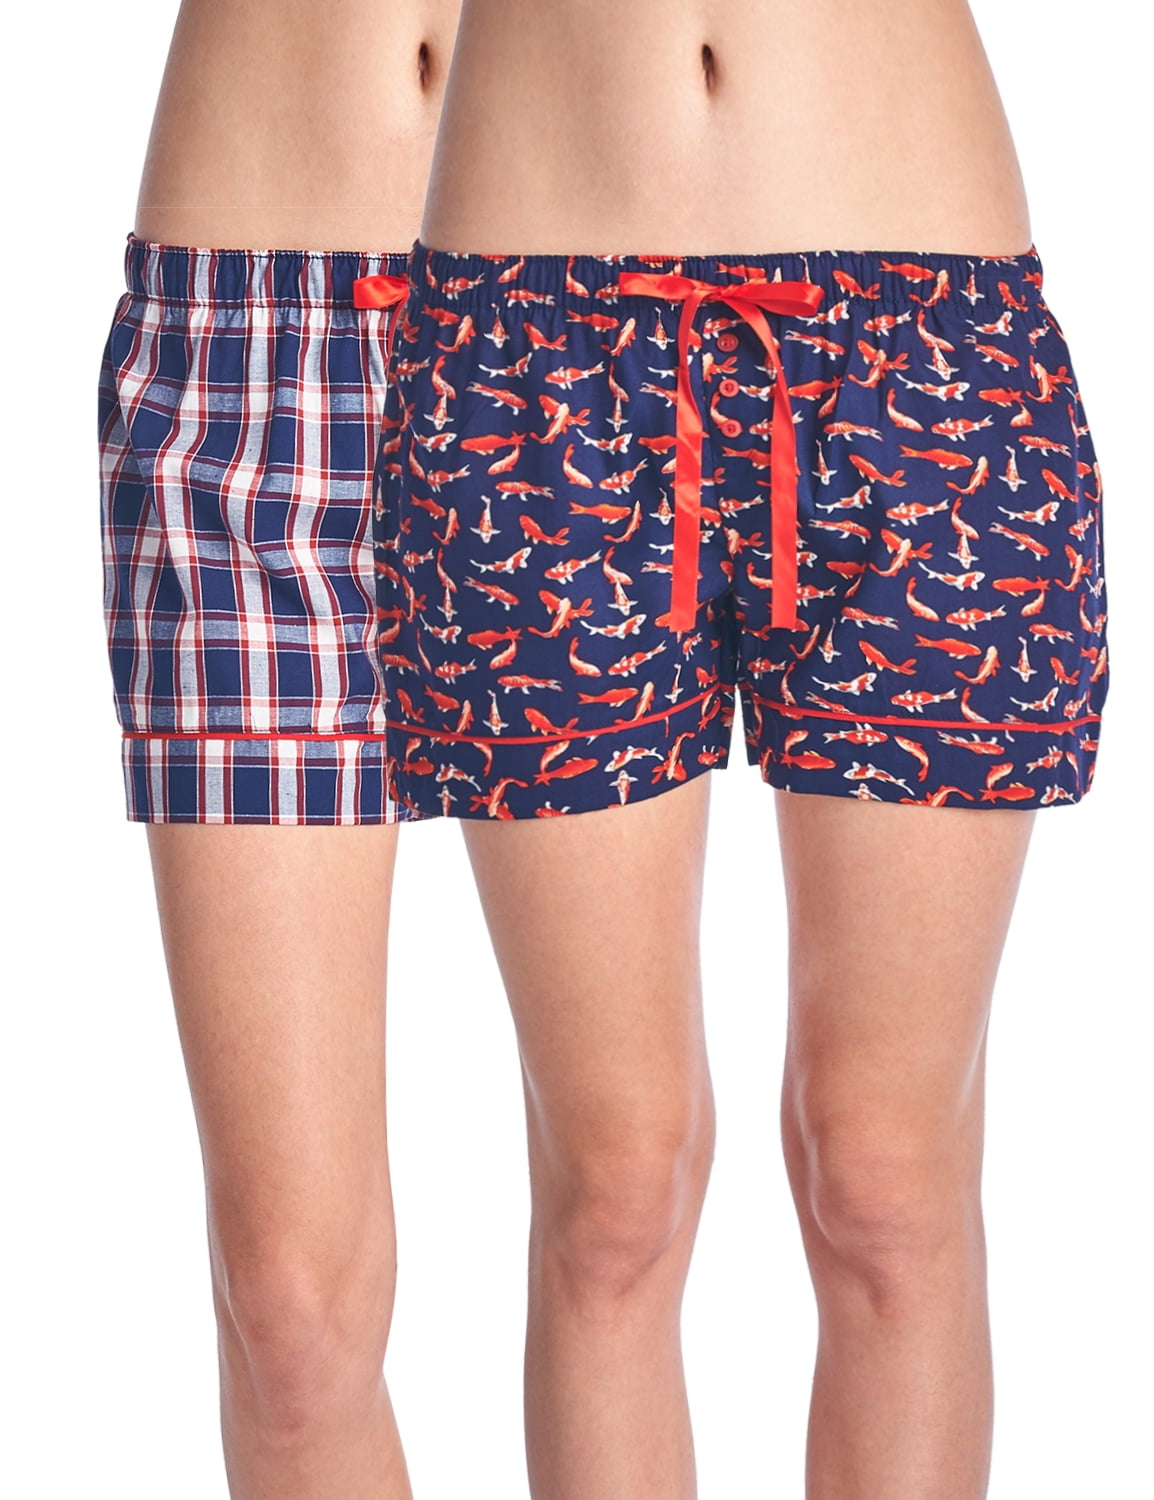 Casual Nights Women's 2 Pack Cotton Woven Lounge Boxer Shorts - Walmart.com